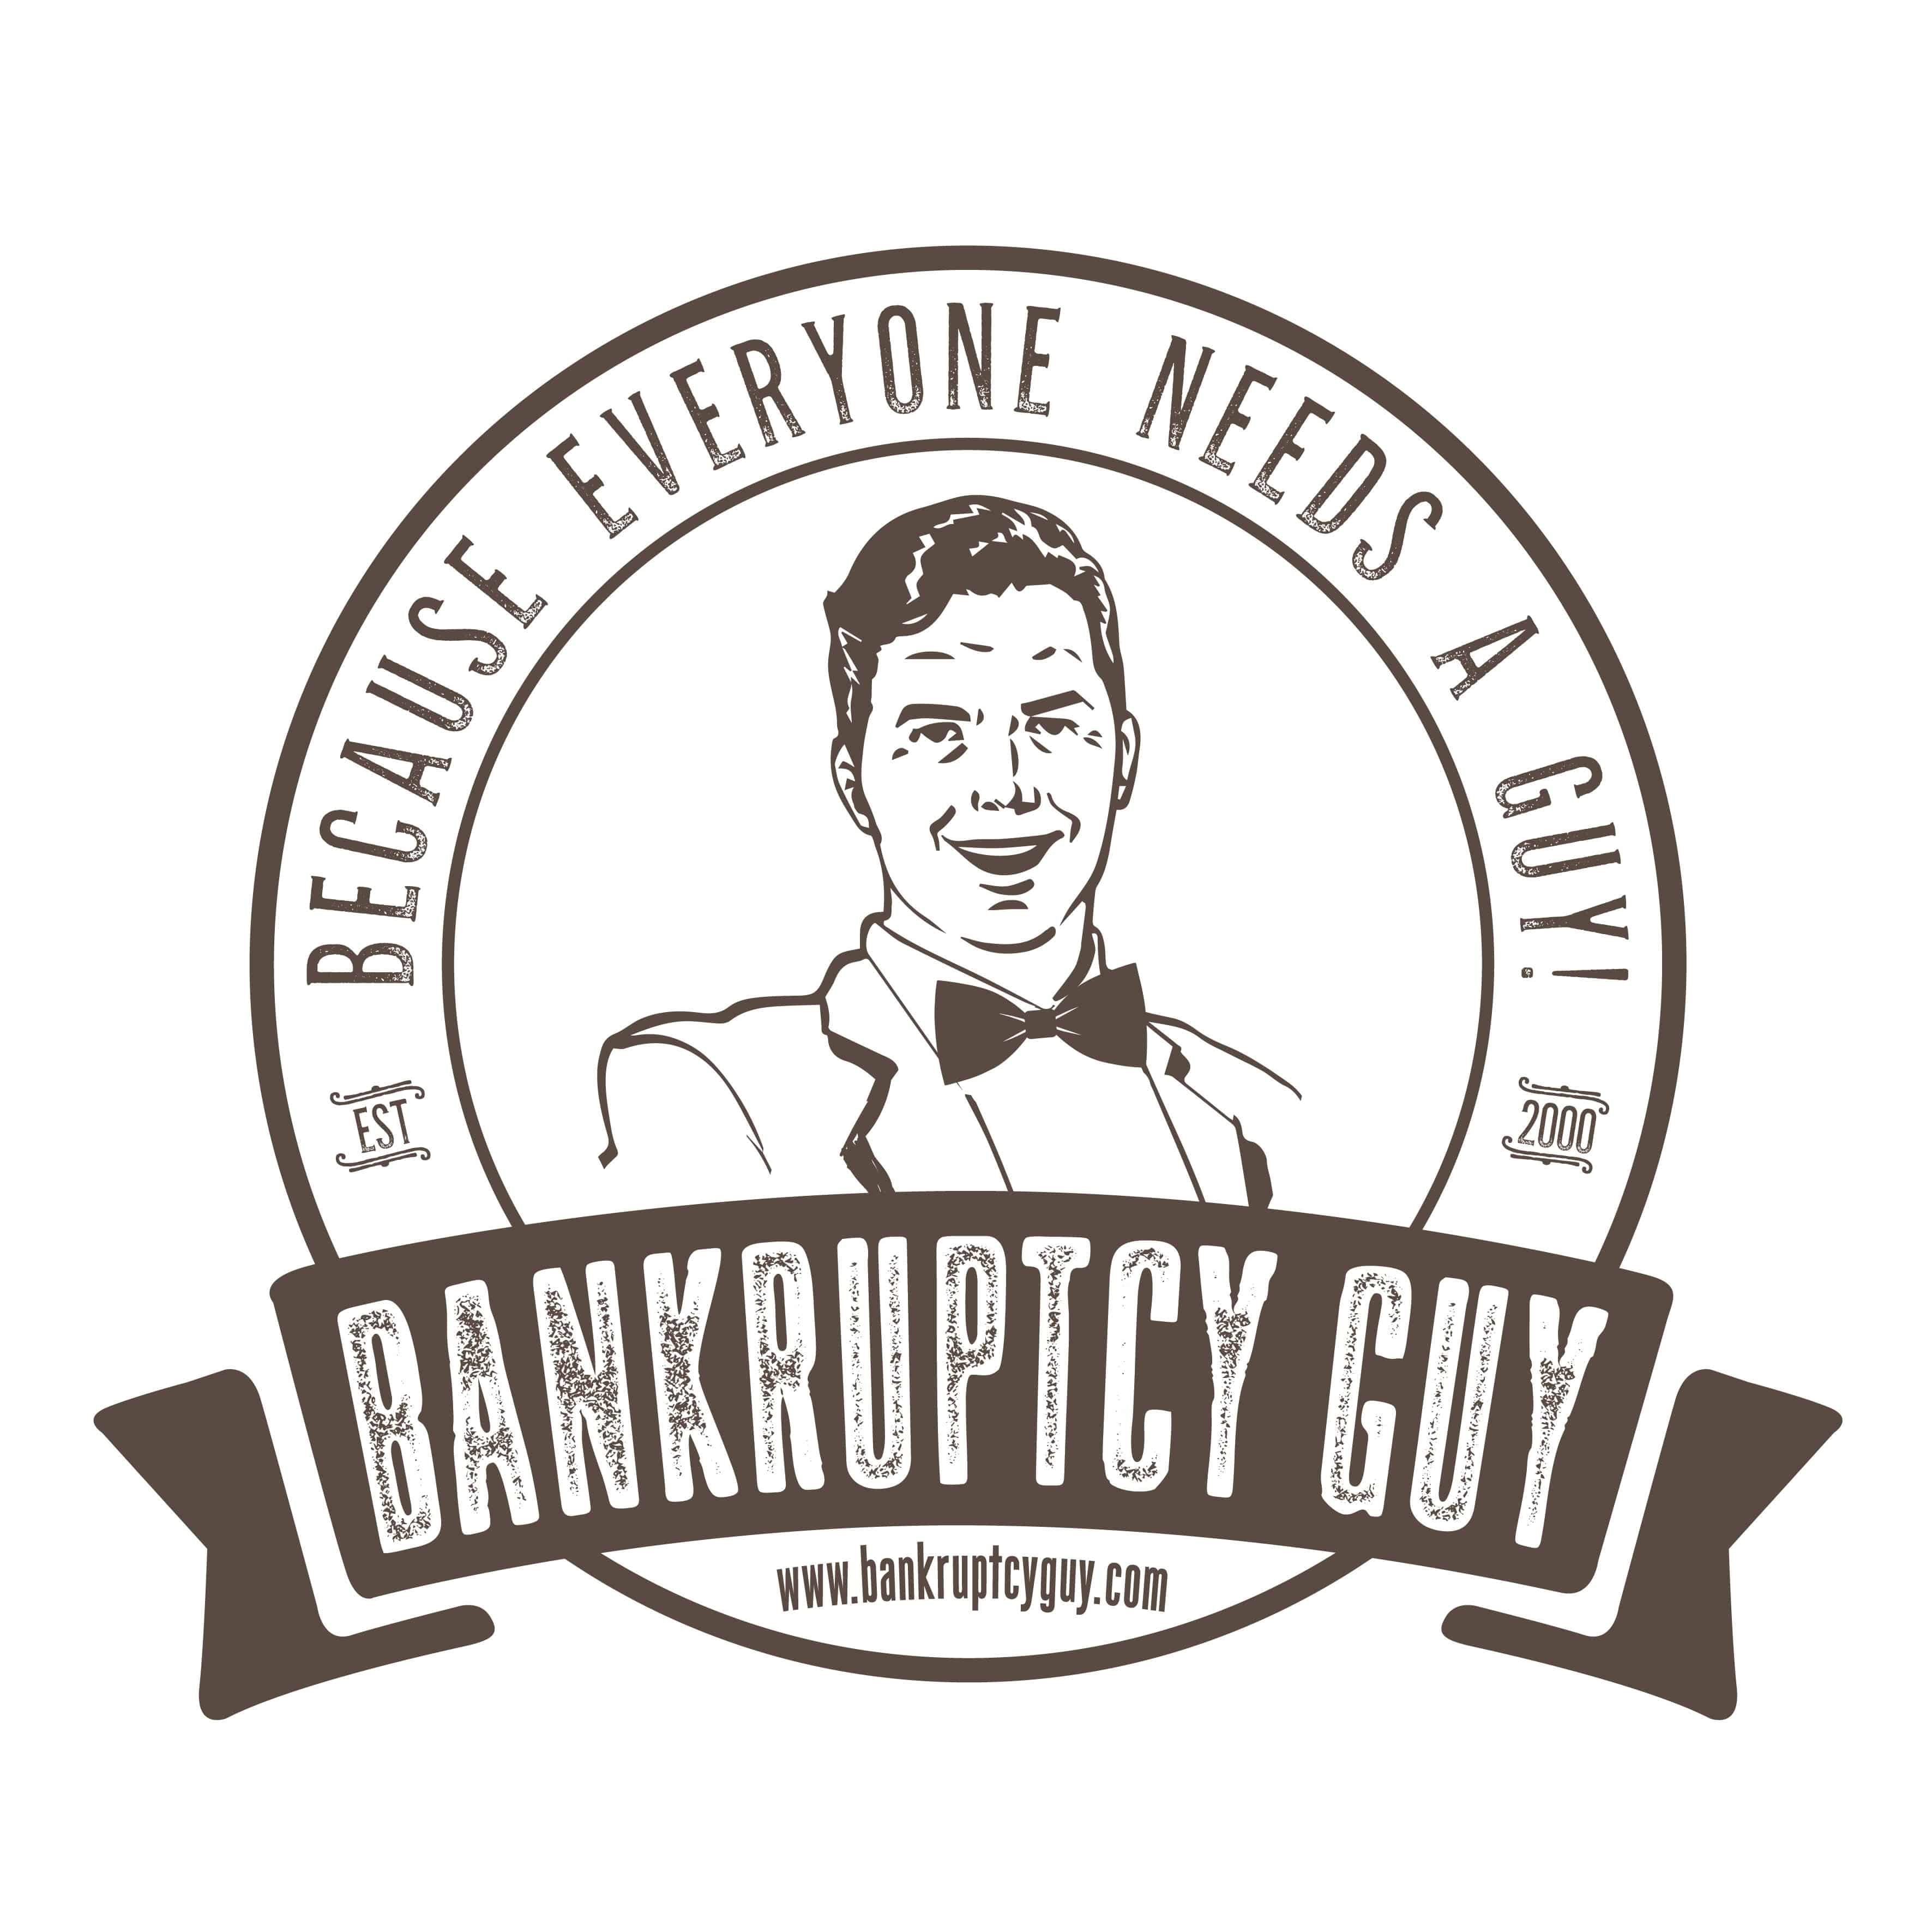 Utah Bankruptcy Guy